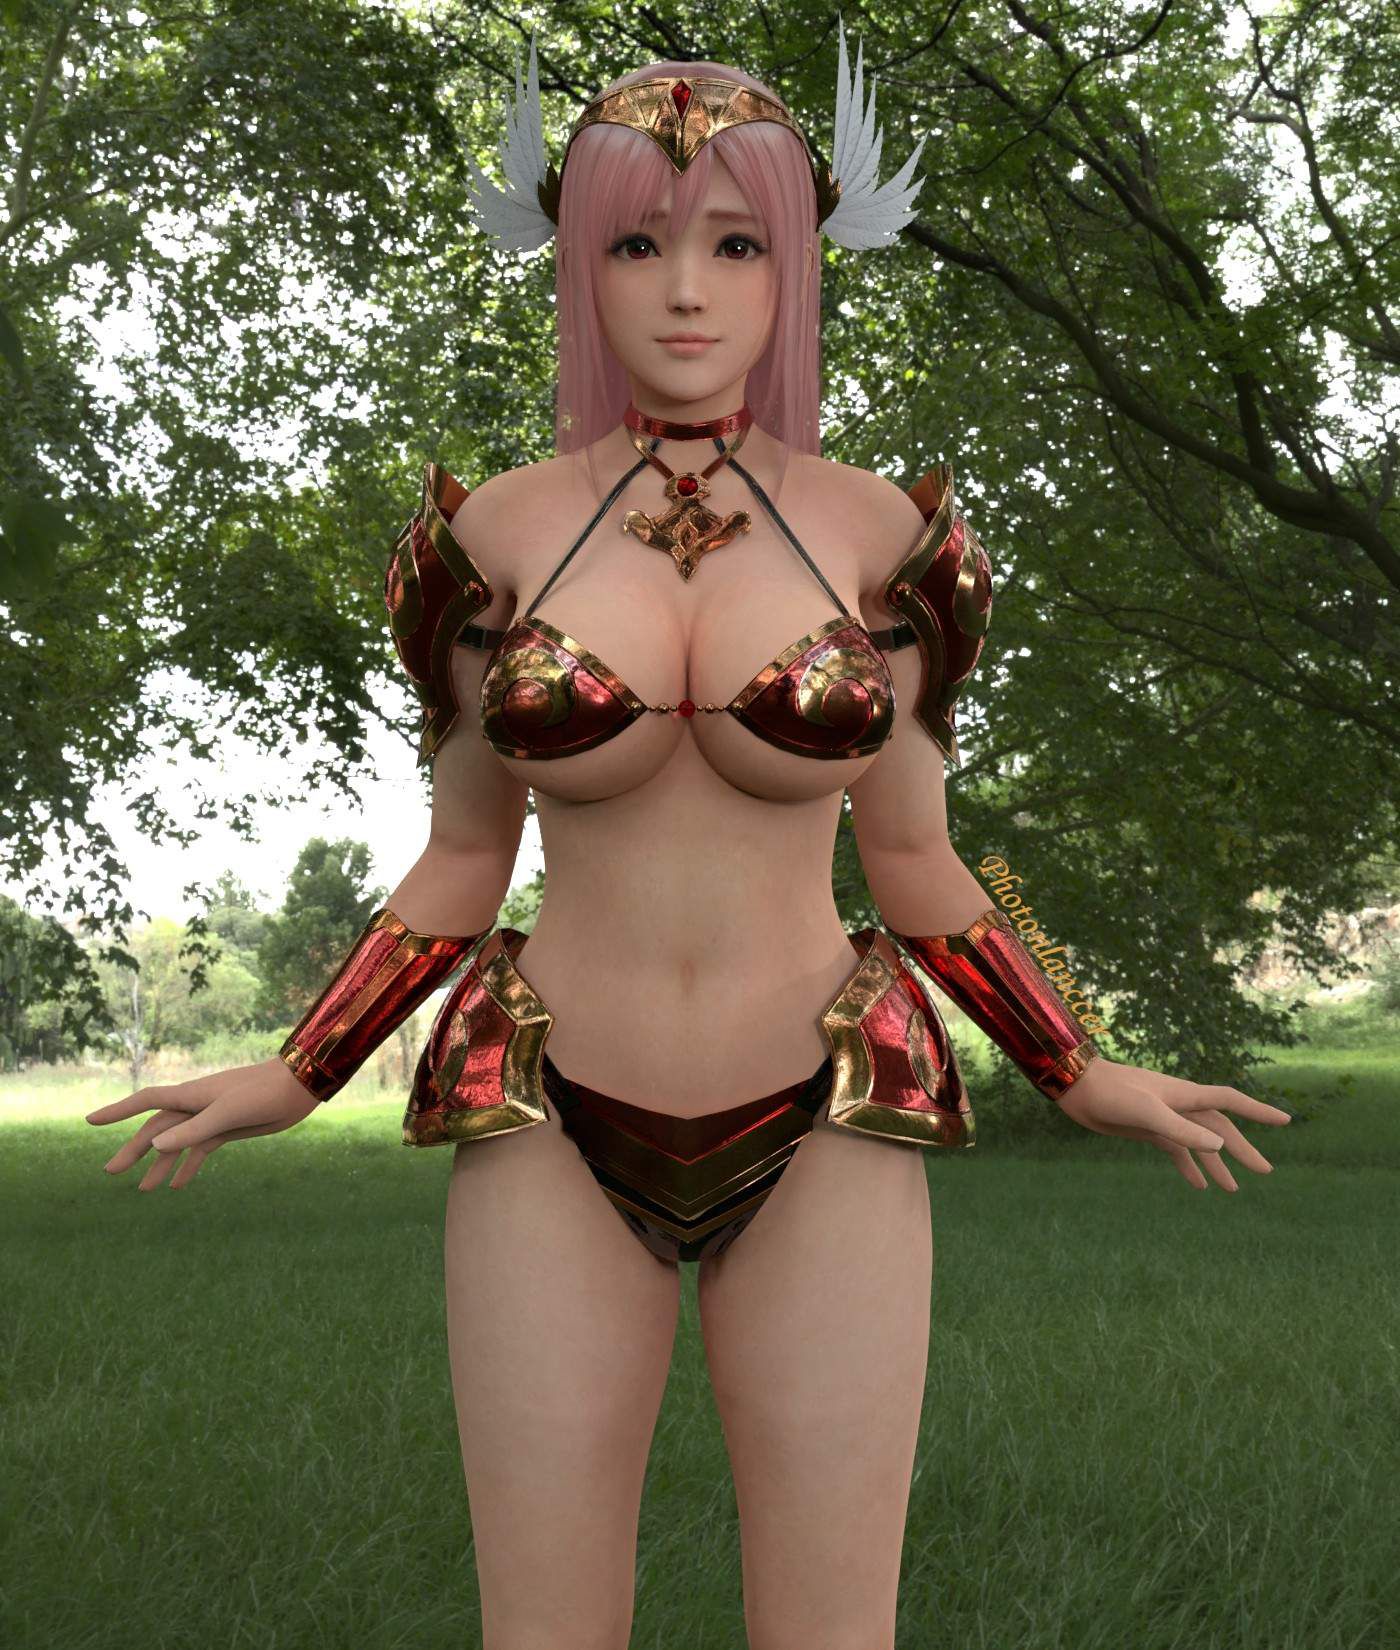 Please erotic image of female warrior 20